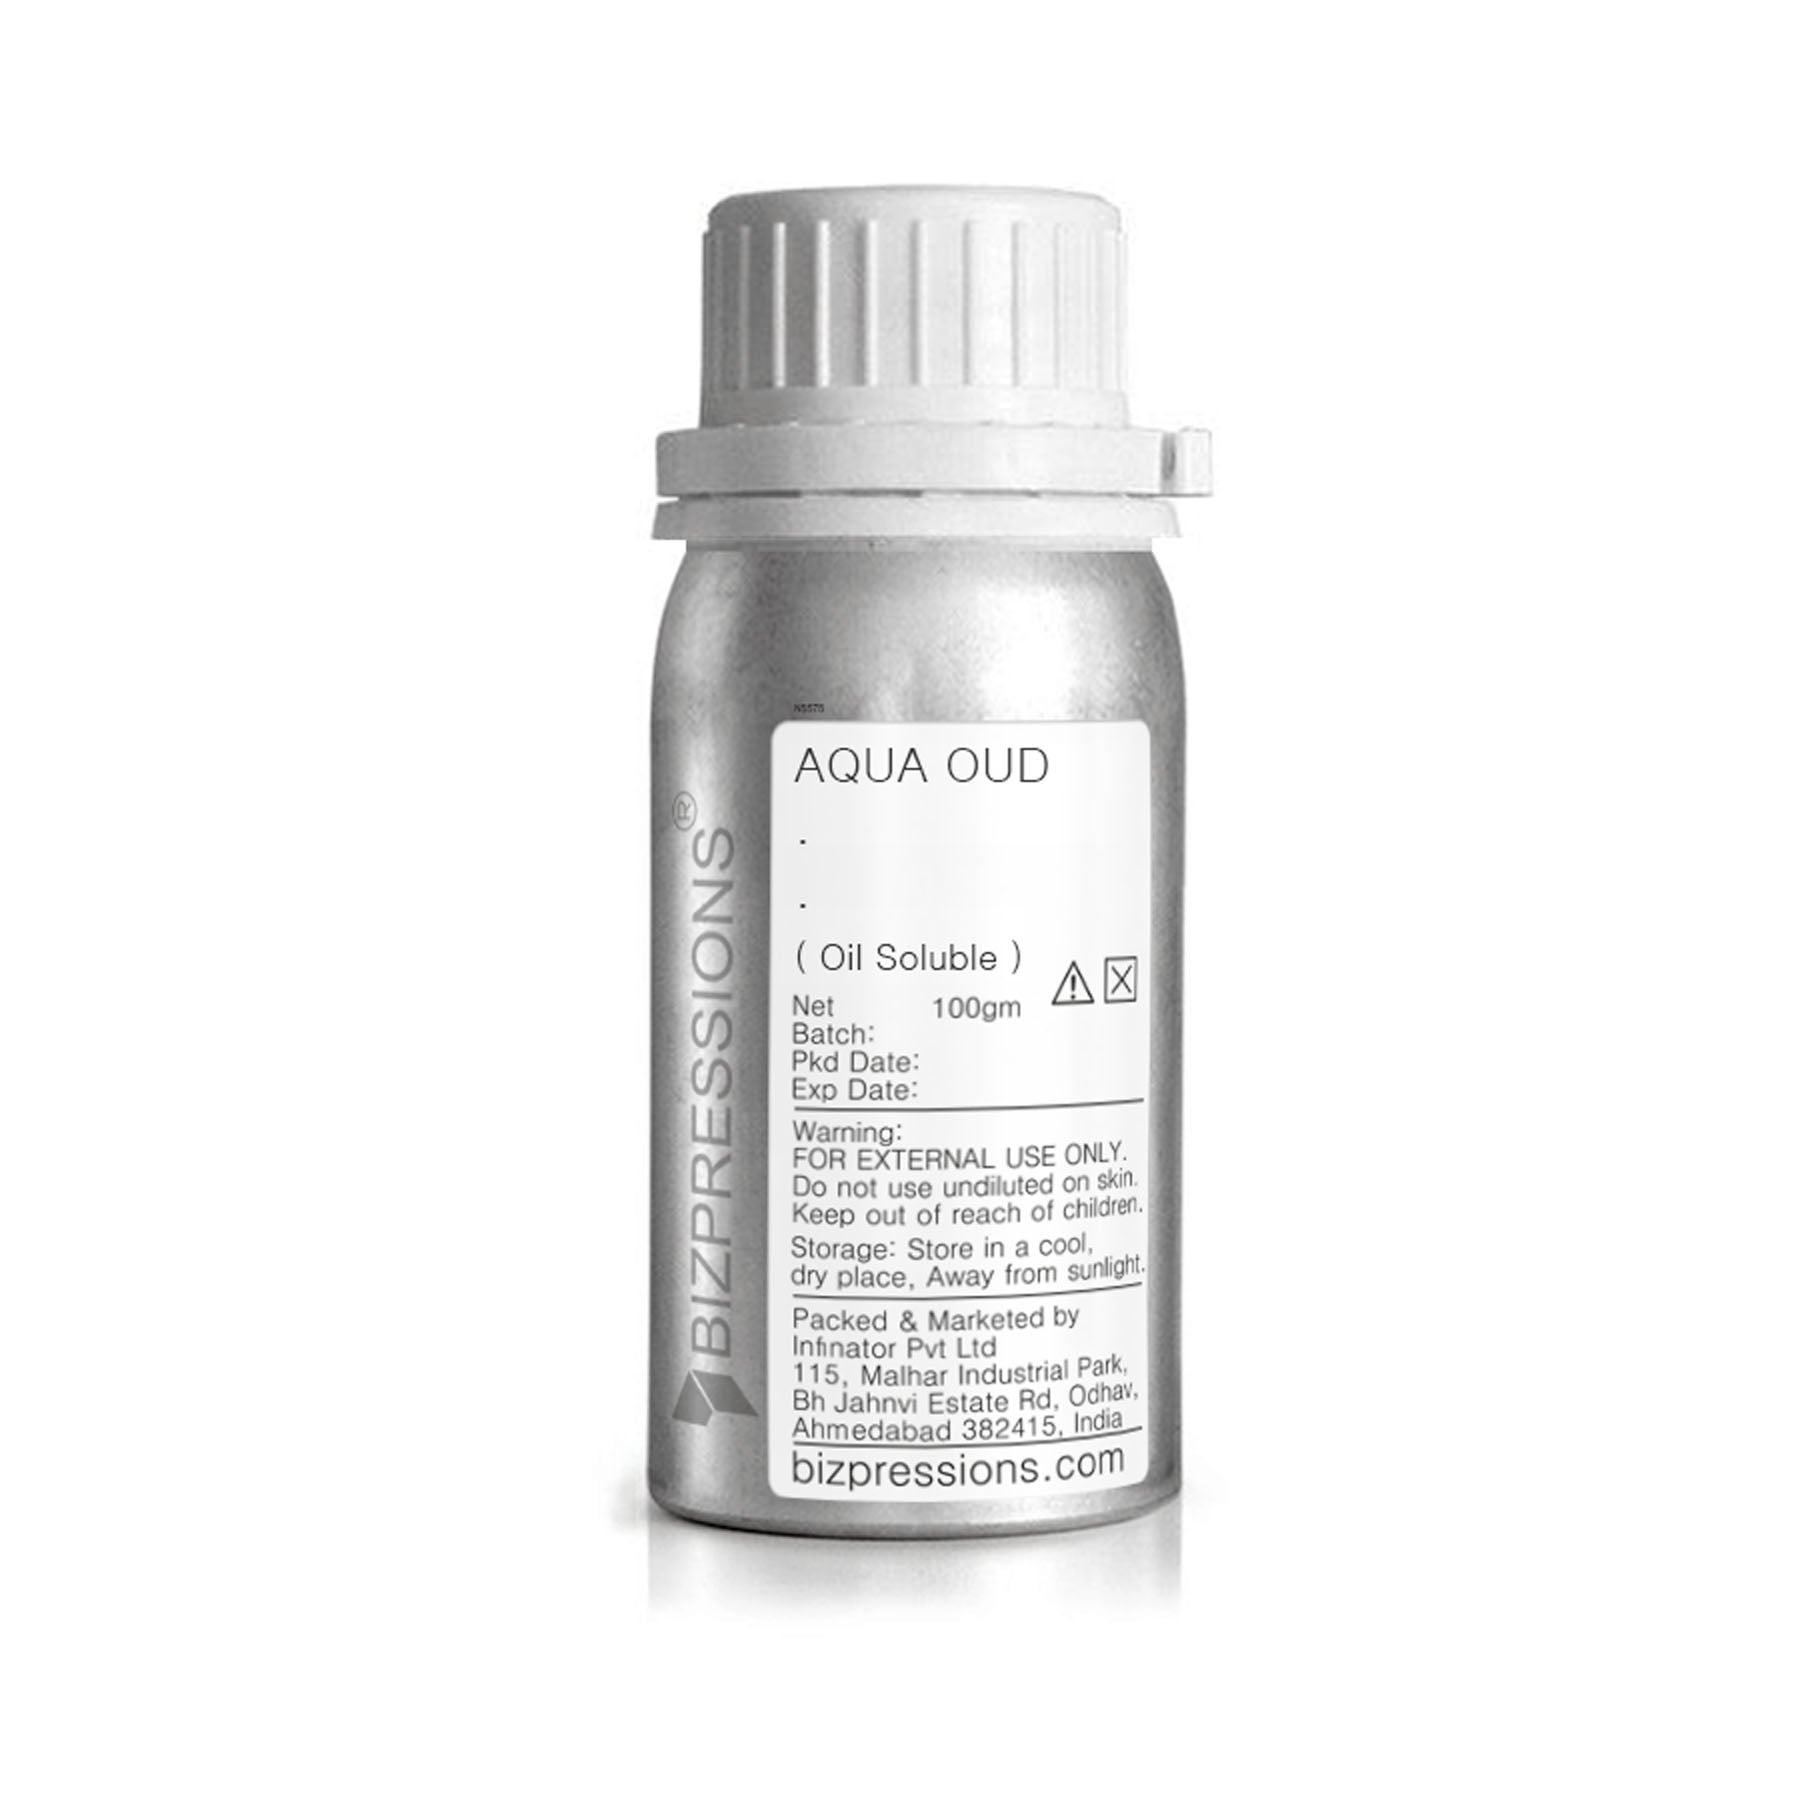 AQUA OUD - Fragrance ( Oil Soluble ) - 100 gm